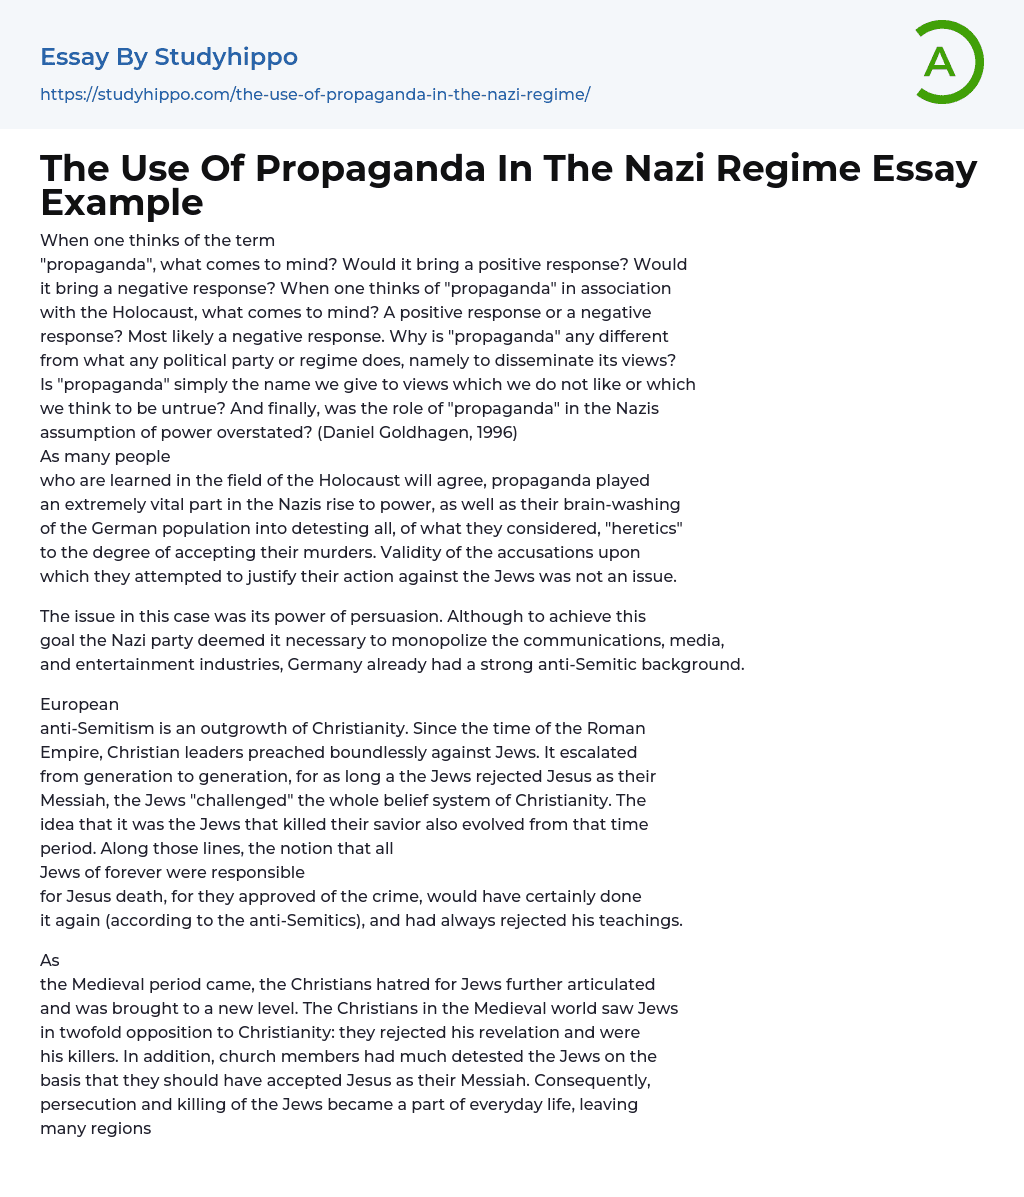 The Use Of Propaganda In The Nazi Regime Essay Example